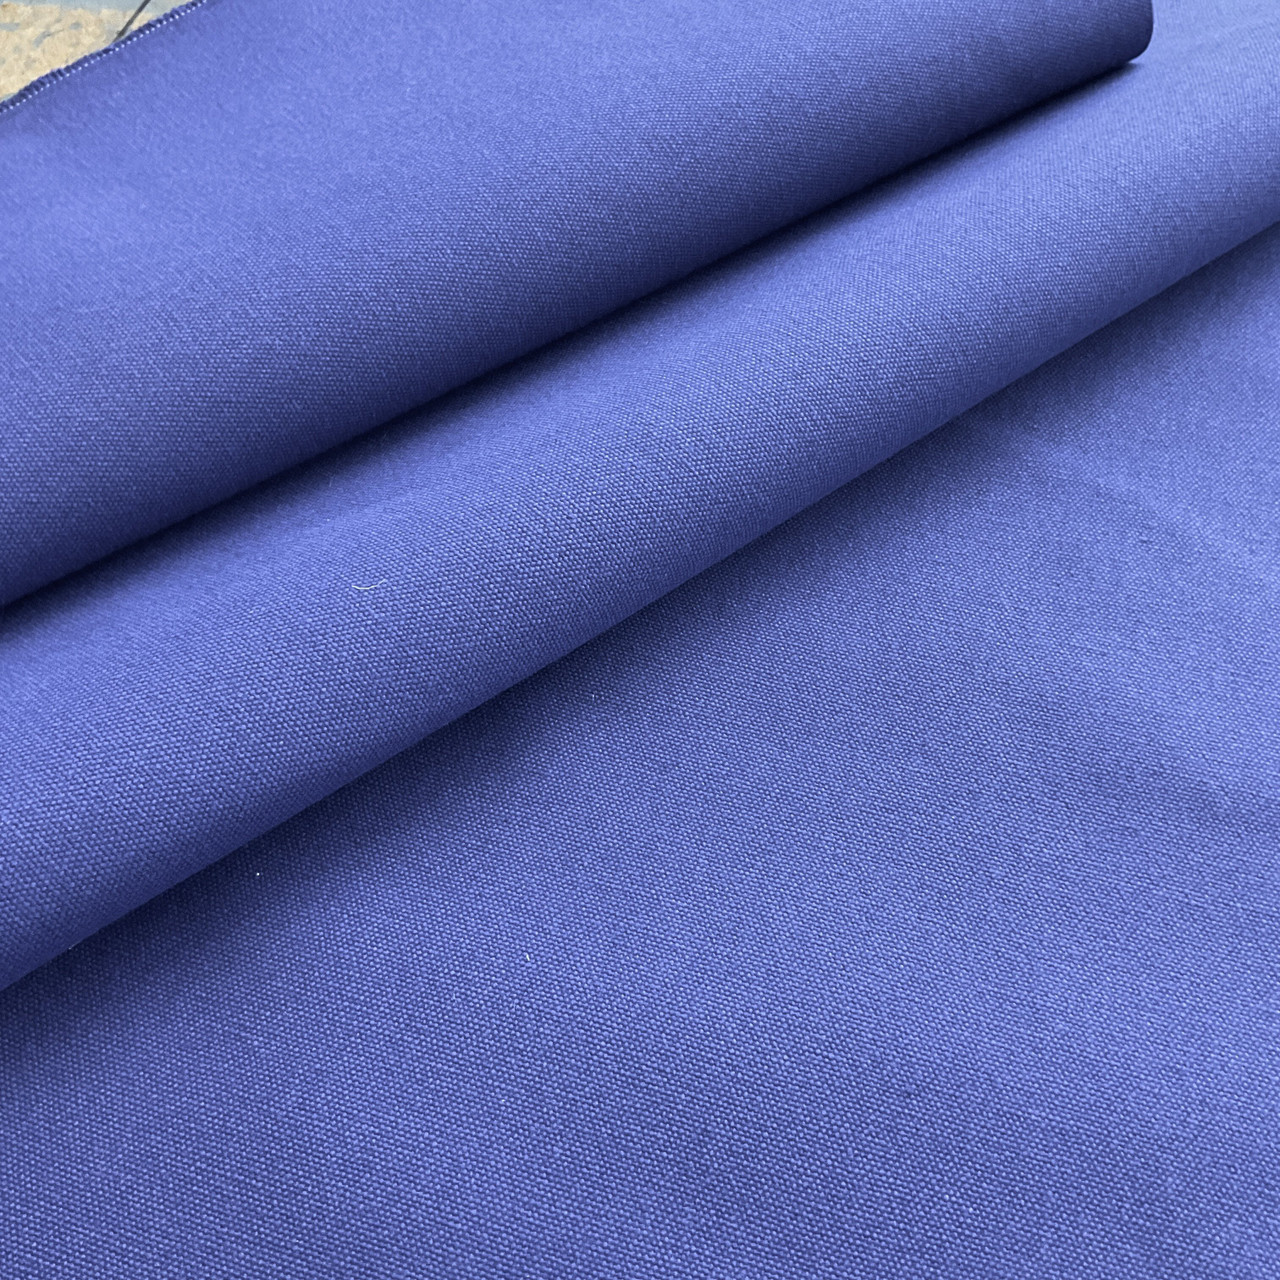 Polyester Twill Solid Royal Blue, Medium Weight Twill Fabric, Home Decor  Fabric